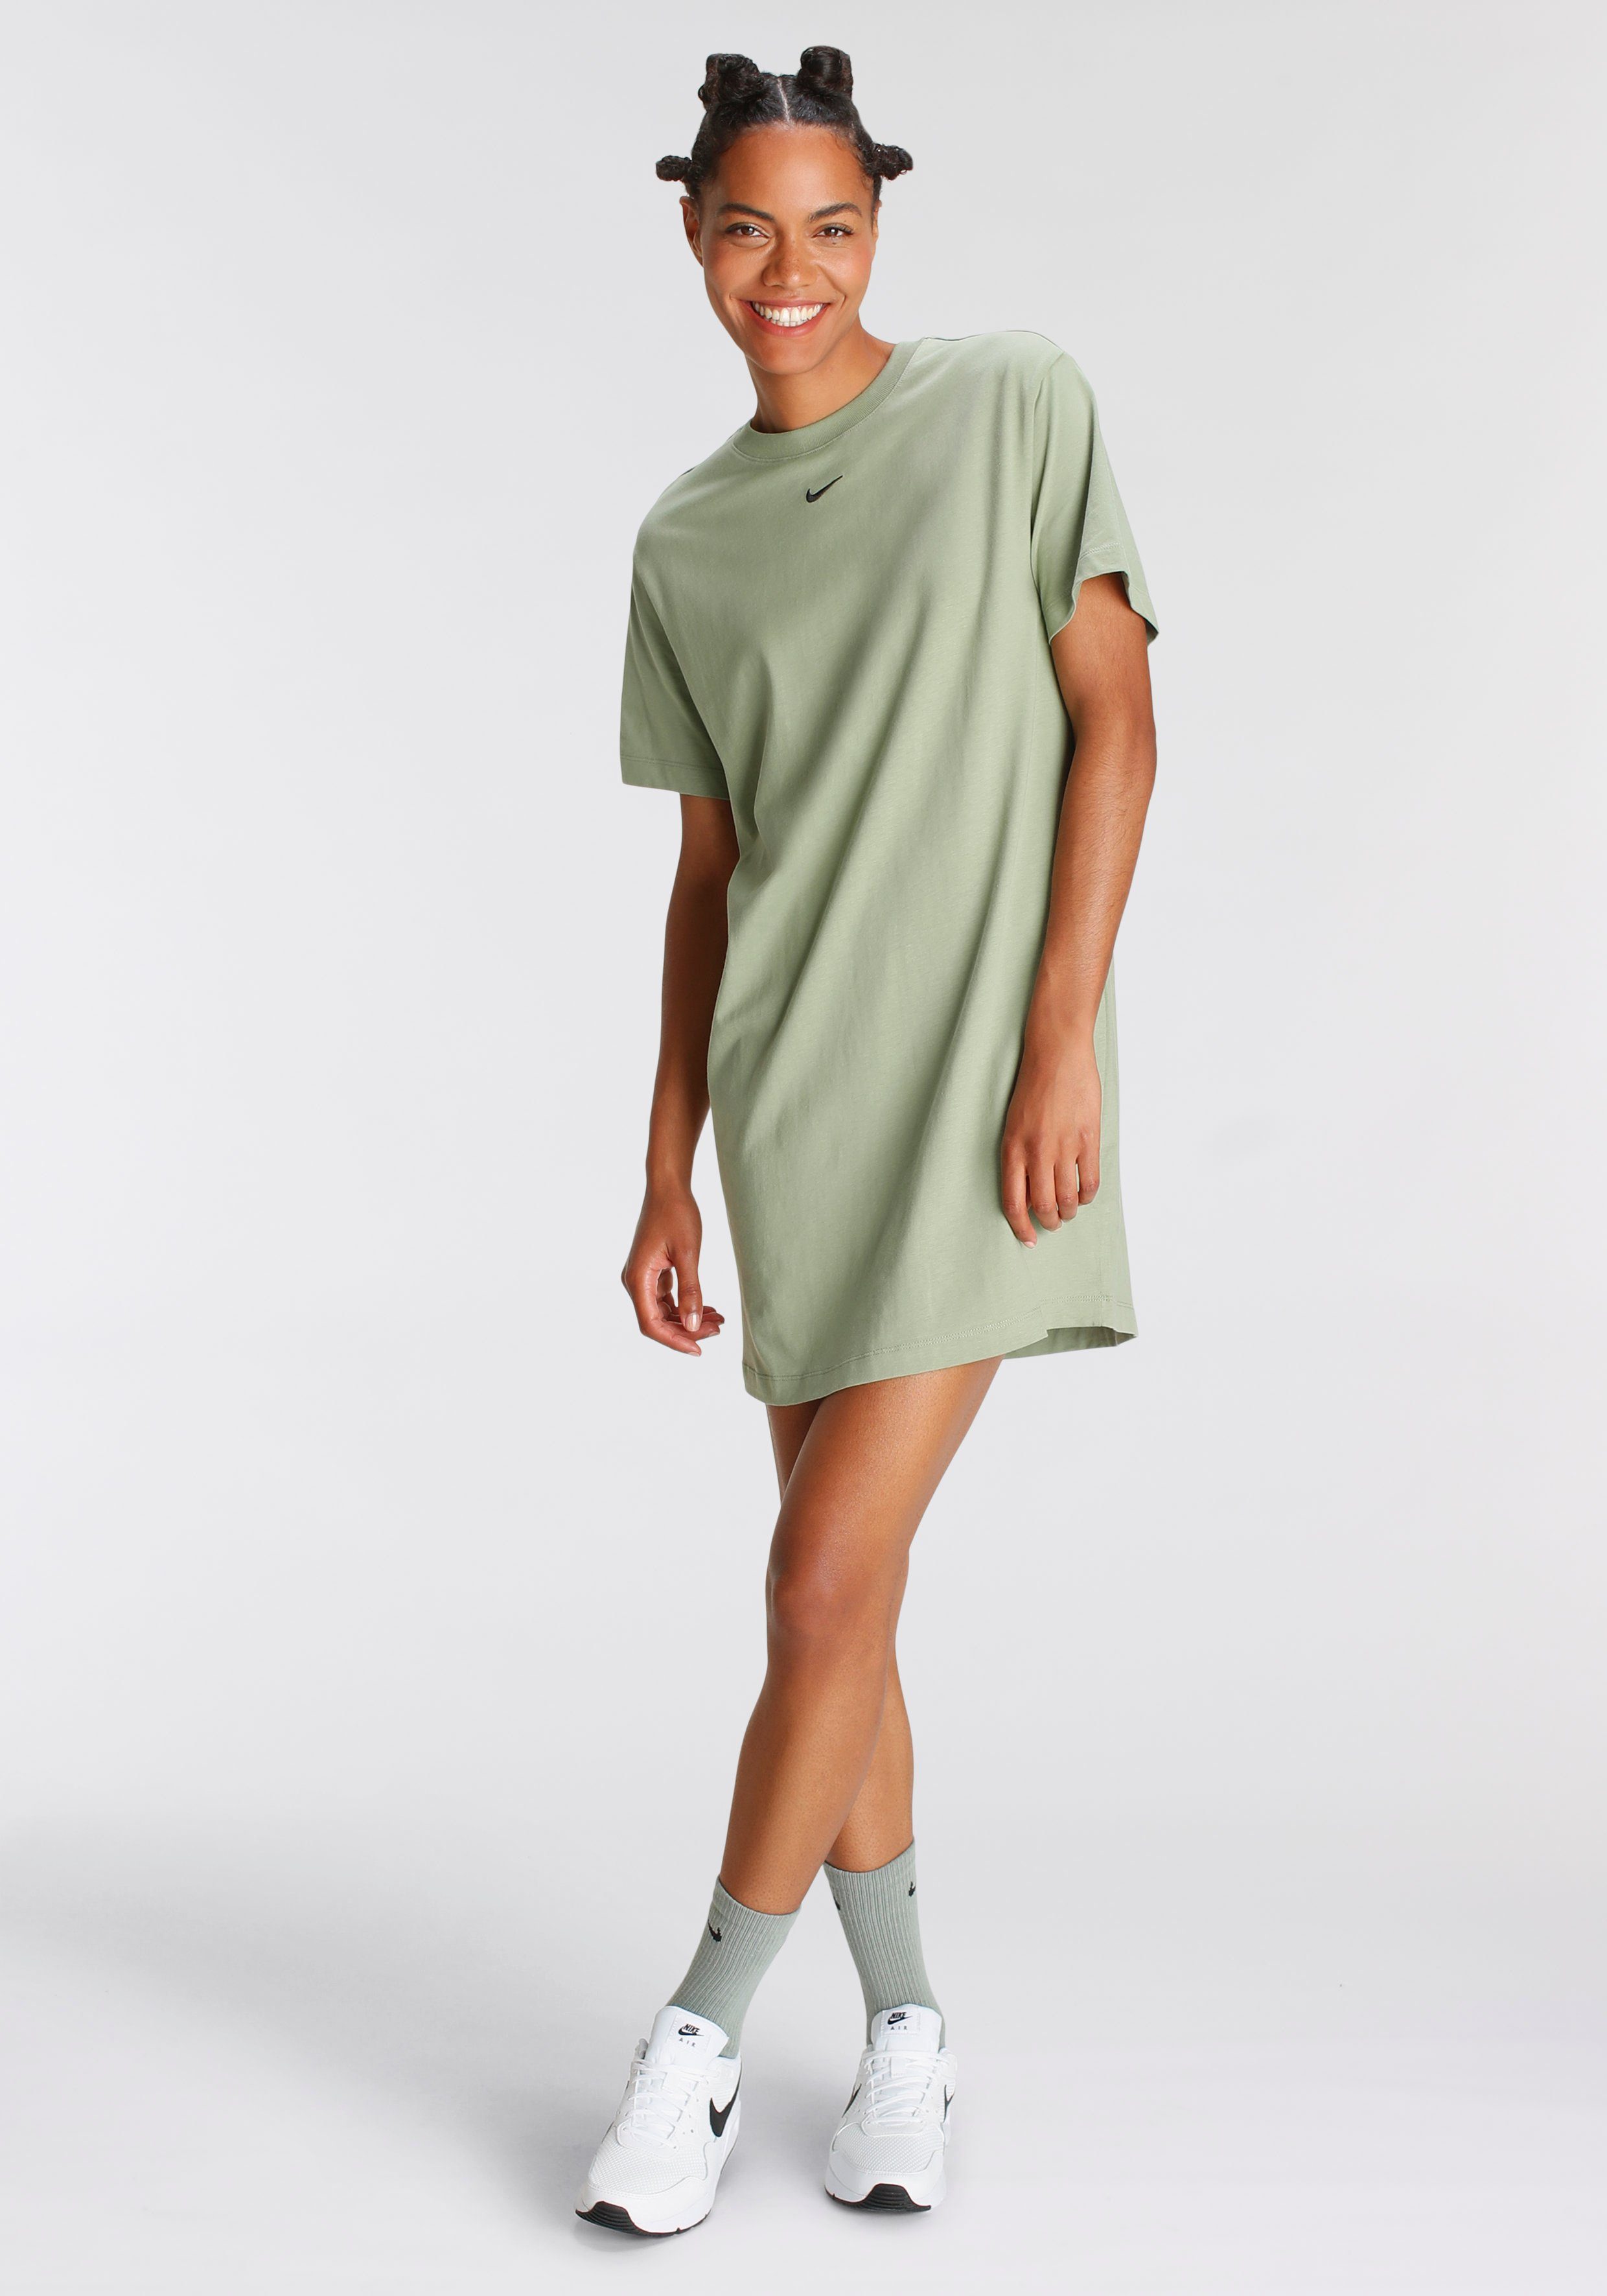 DRESS Sportswear SHORT-SLEEVE Sommerkleid WOMEN'S ESSENTIAL Nike OIL GREEN/BLACK